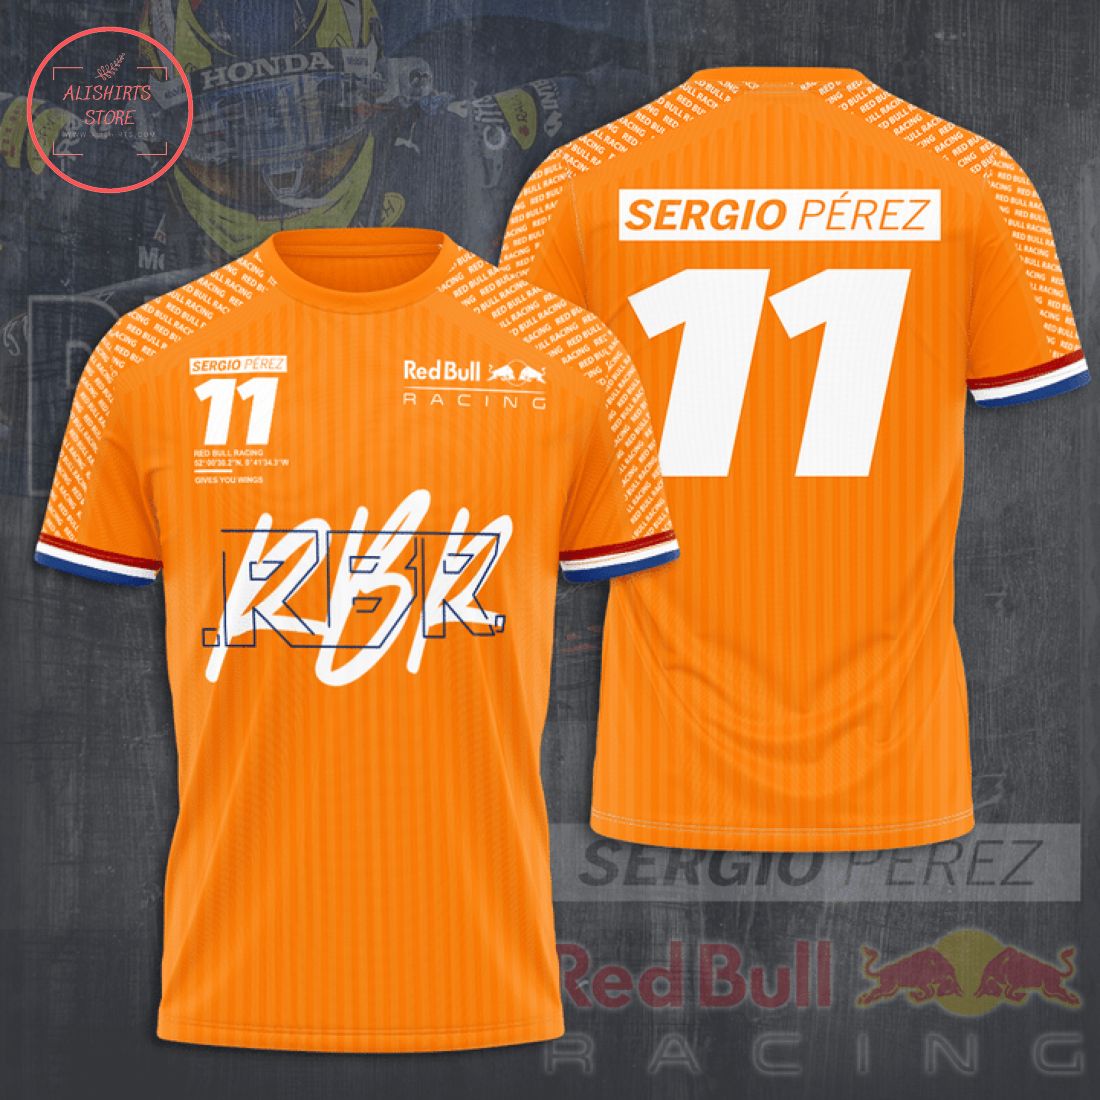 Sergio Perez 11 Red Bull Racing Team 3d Shirt